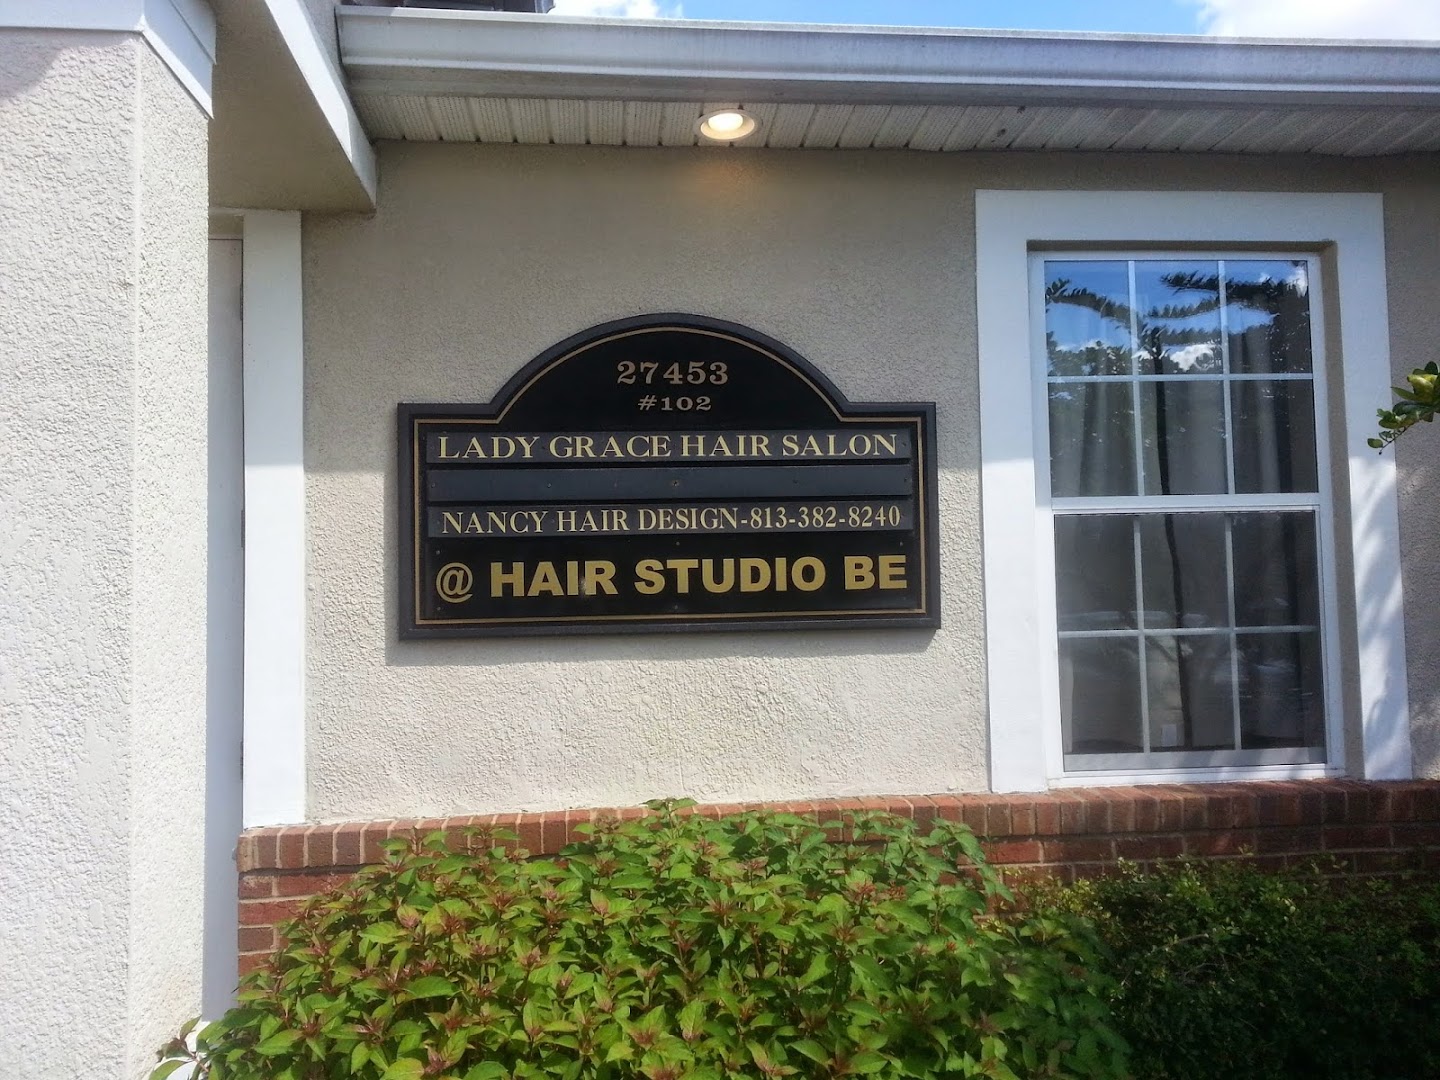 @ Hair Studio Be